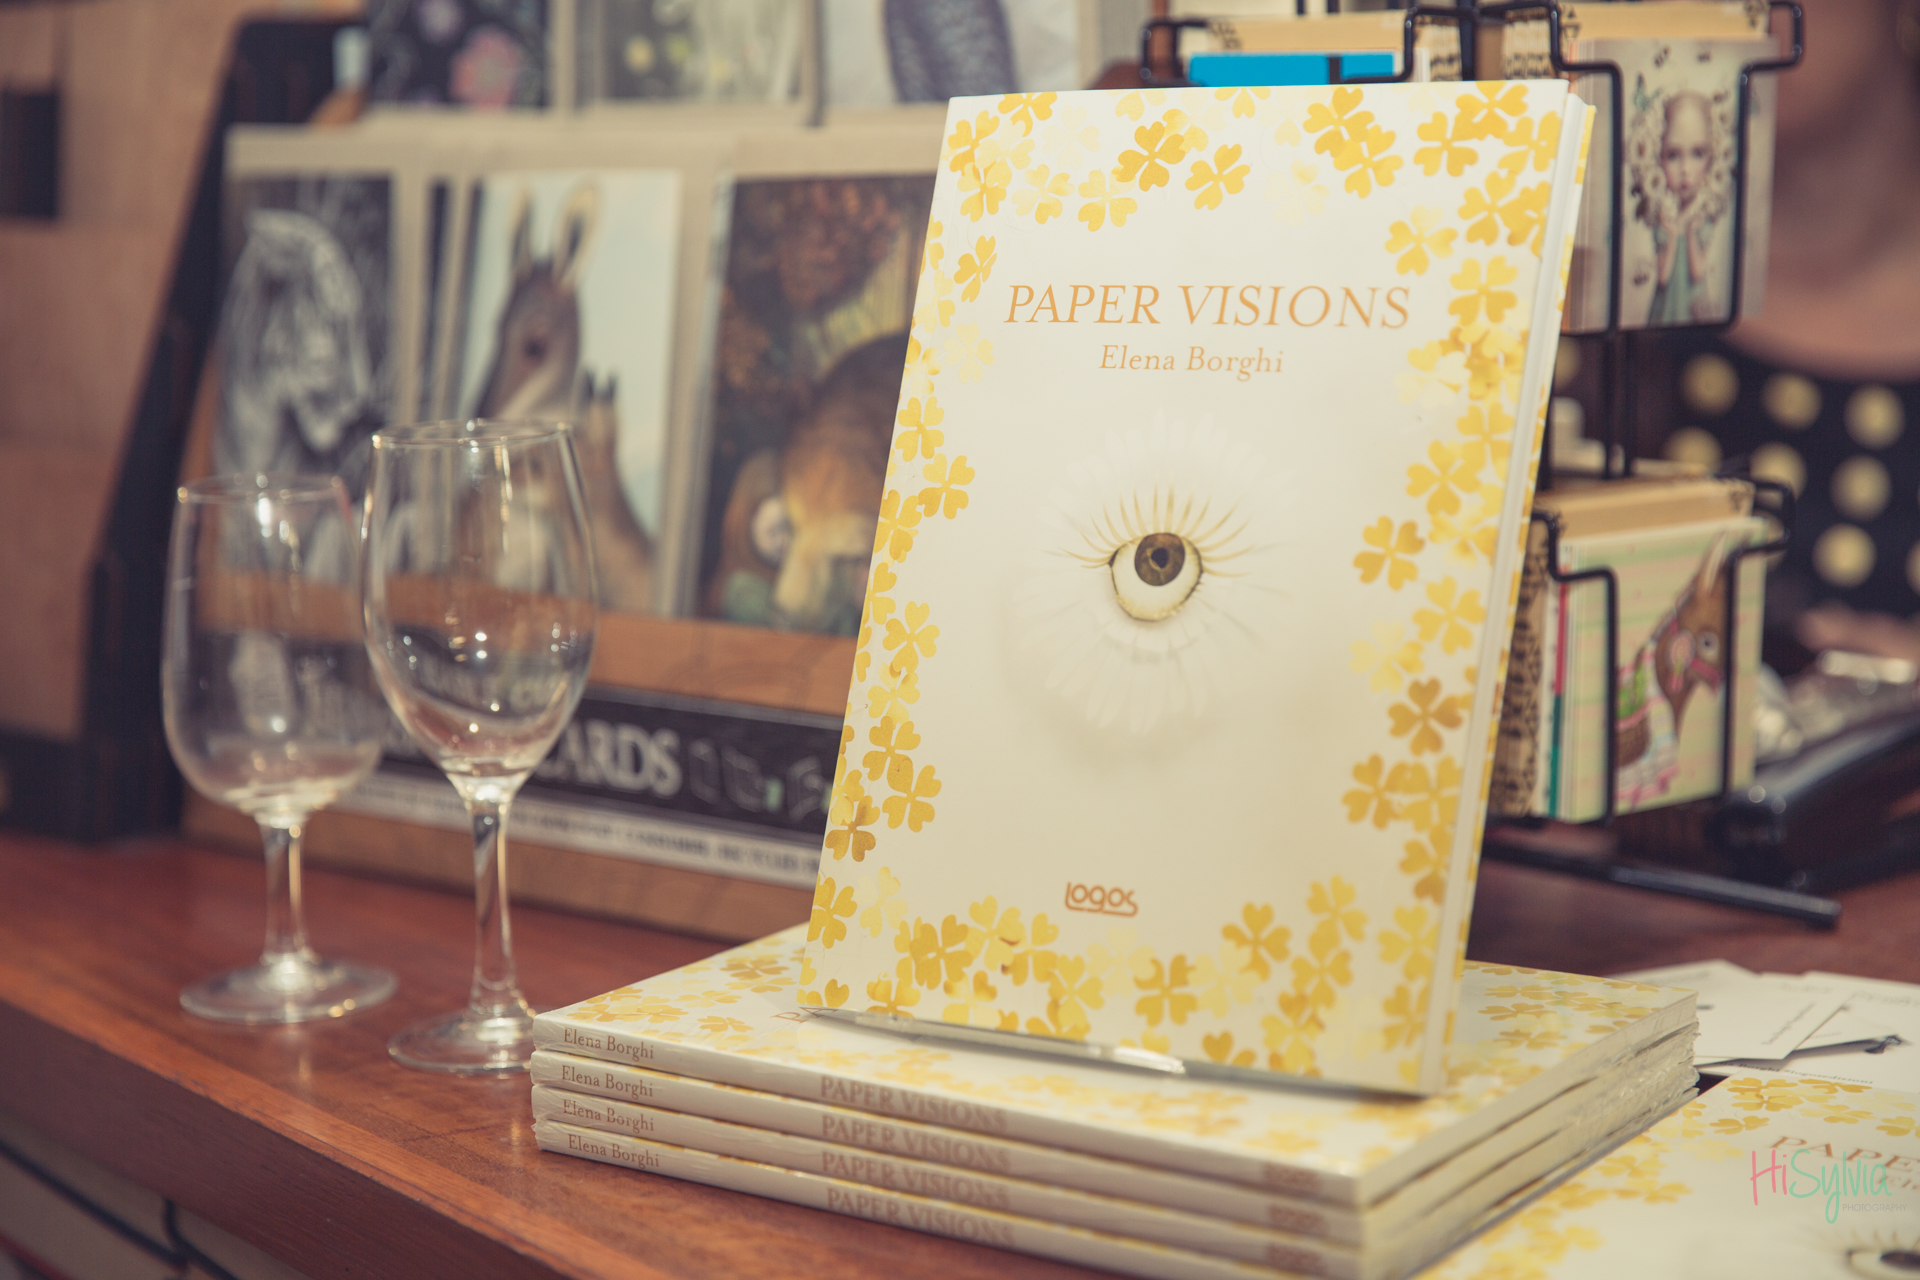 PAPER VISIONS in tour a Melbourne! Elena Borghi, Logos Edizioni. Book signing at Brunswick Bound library